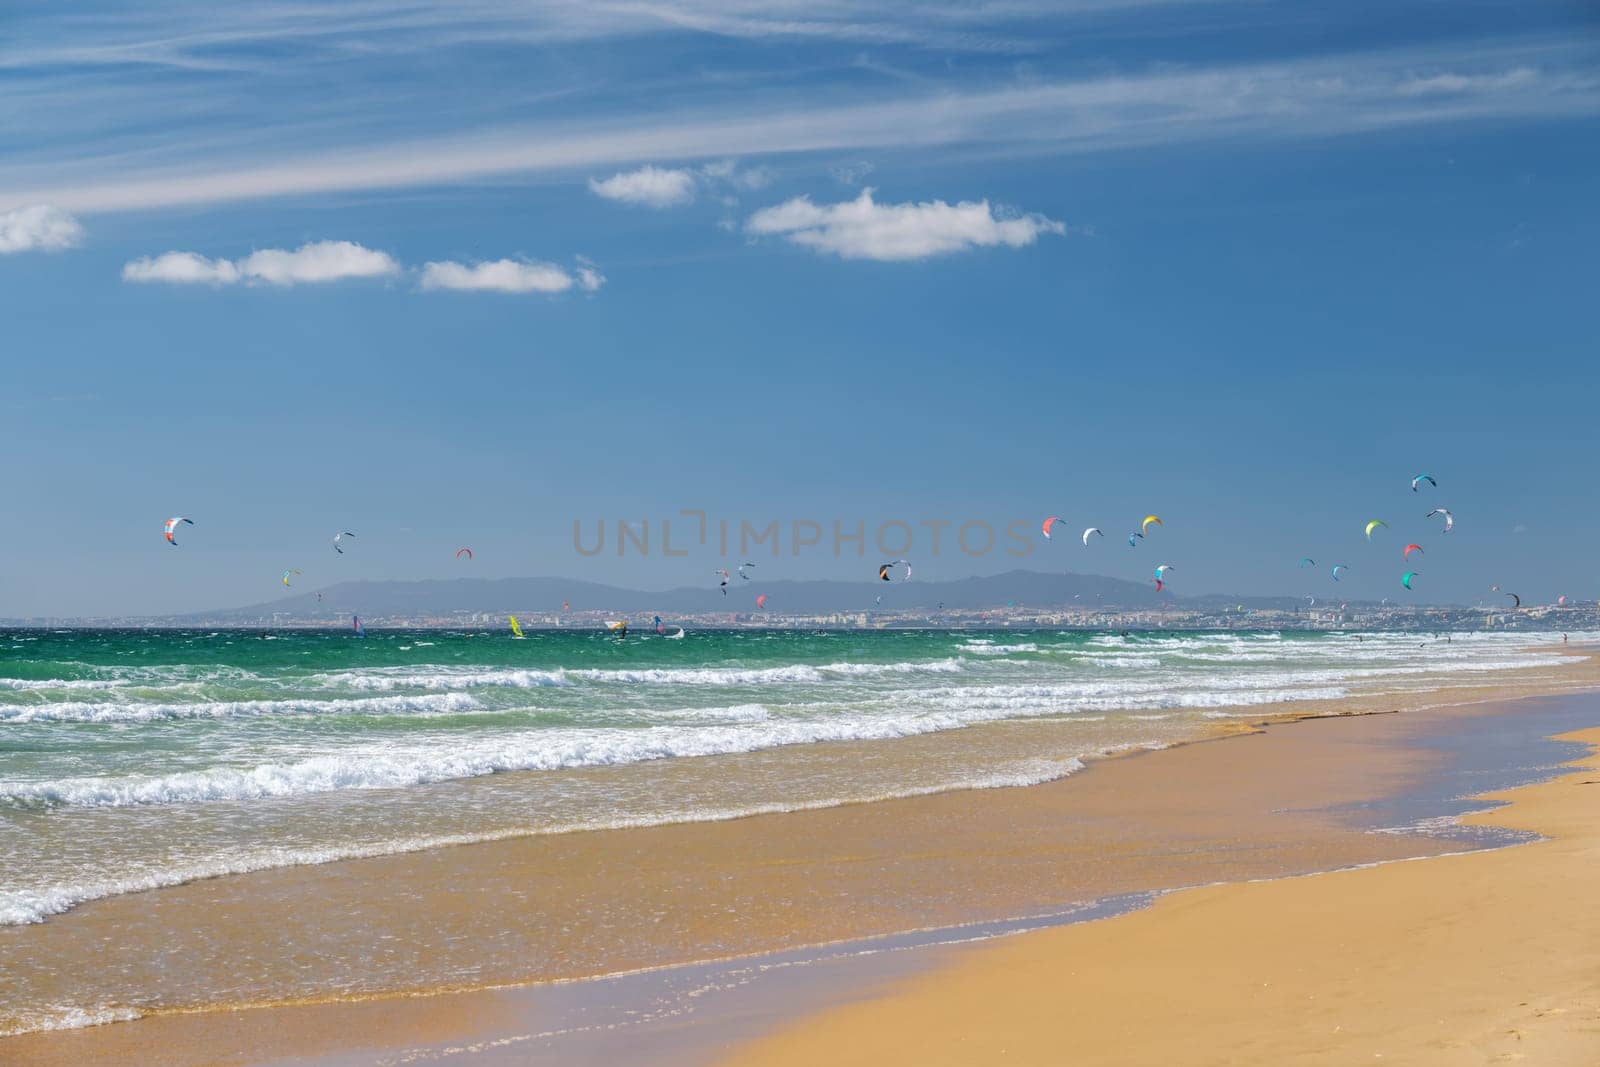 Kiteboarding kitesurfing kiteboarder kitesurfer kites on the ocean beach by dimol